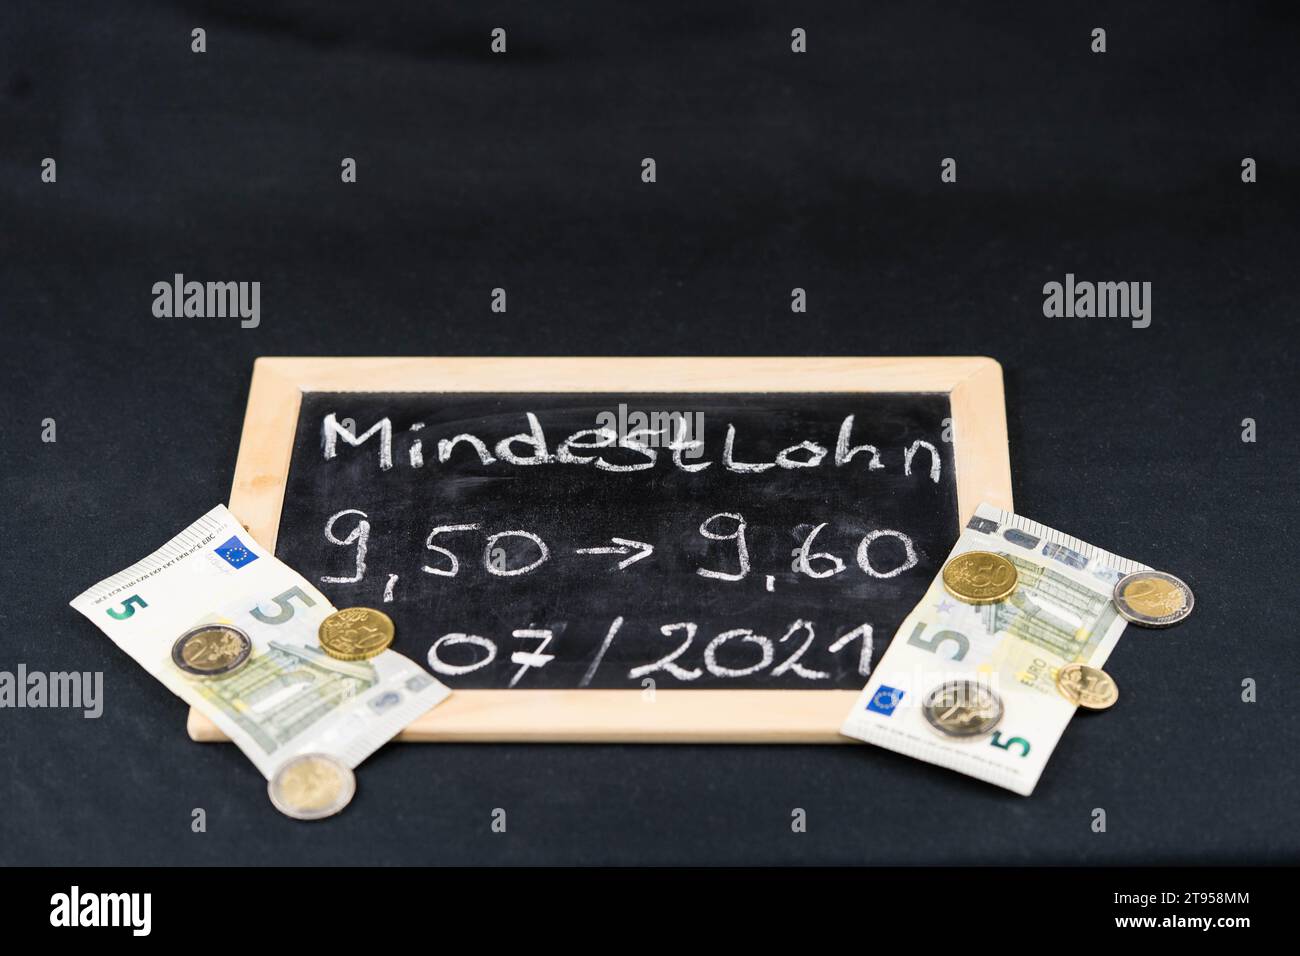 blackboard lettering Mindestlohn, minimum wage, 07/2021, new hourly rate 9,60 ? Stock Photo